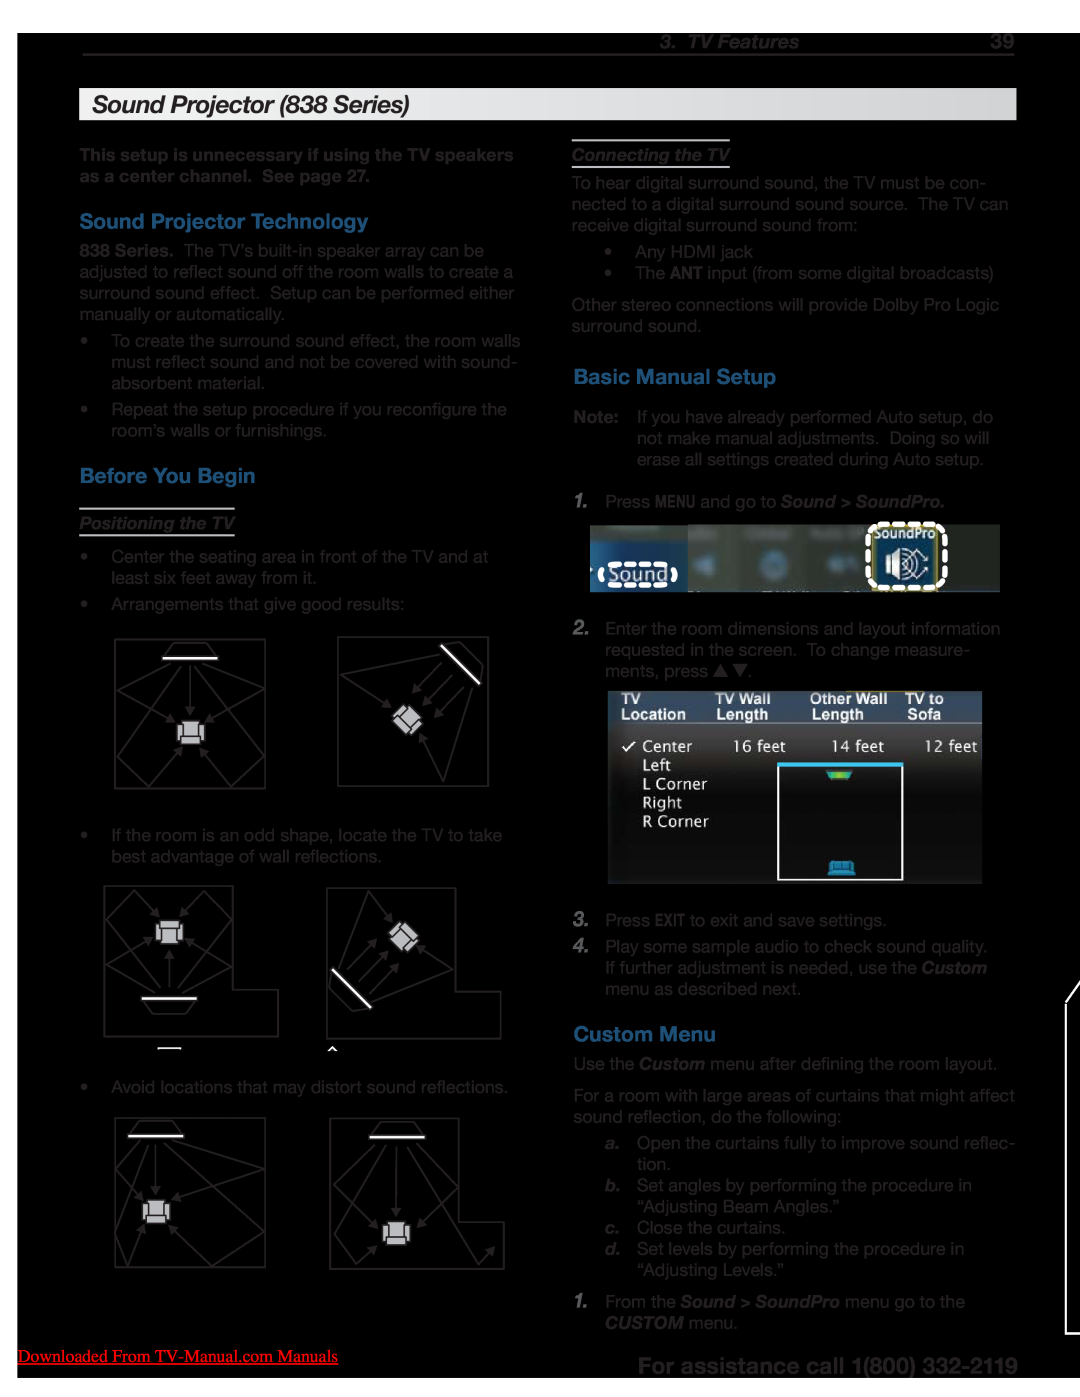 Mitsumi electronic 738 Series manual Sound Projector 838 Series, For assistance call 1800, Sound Projector Technology 